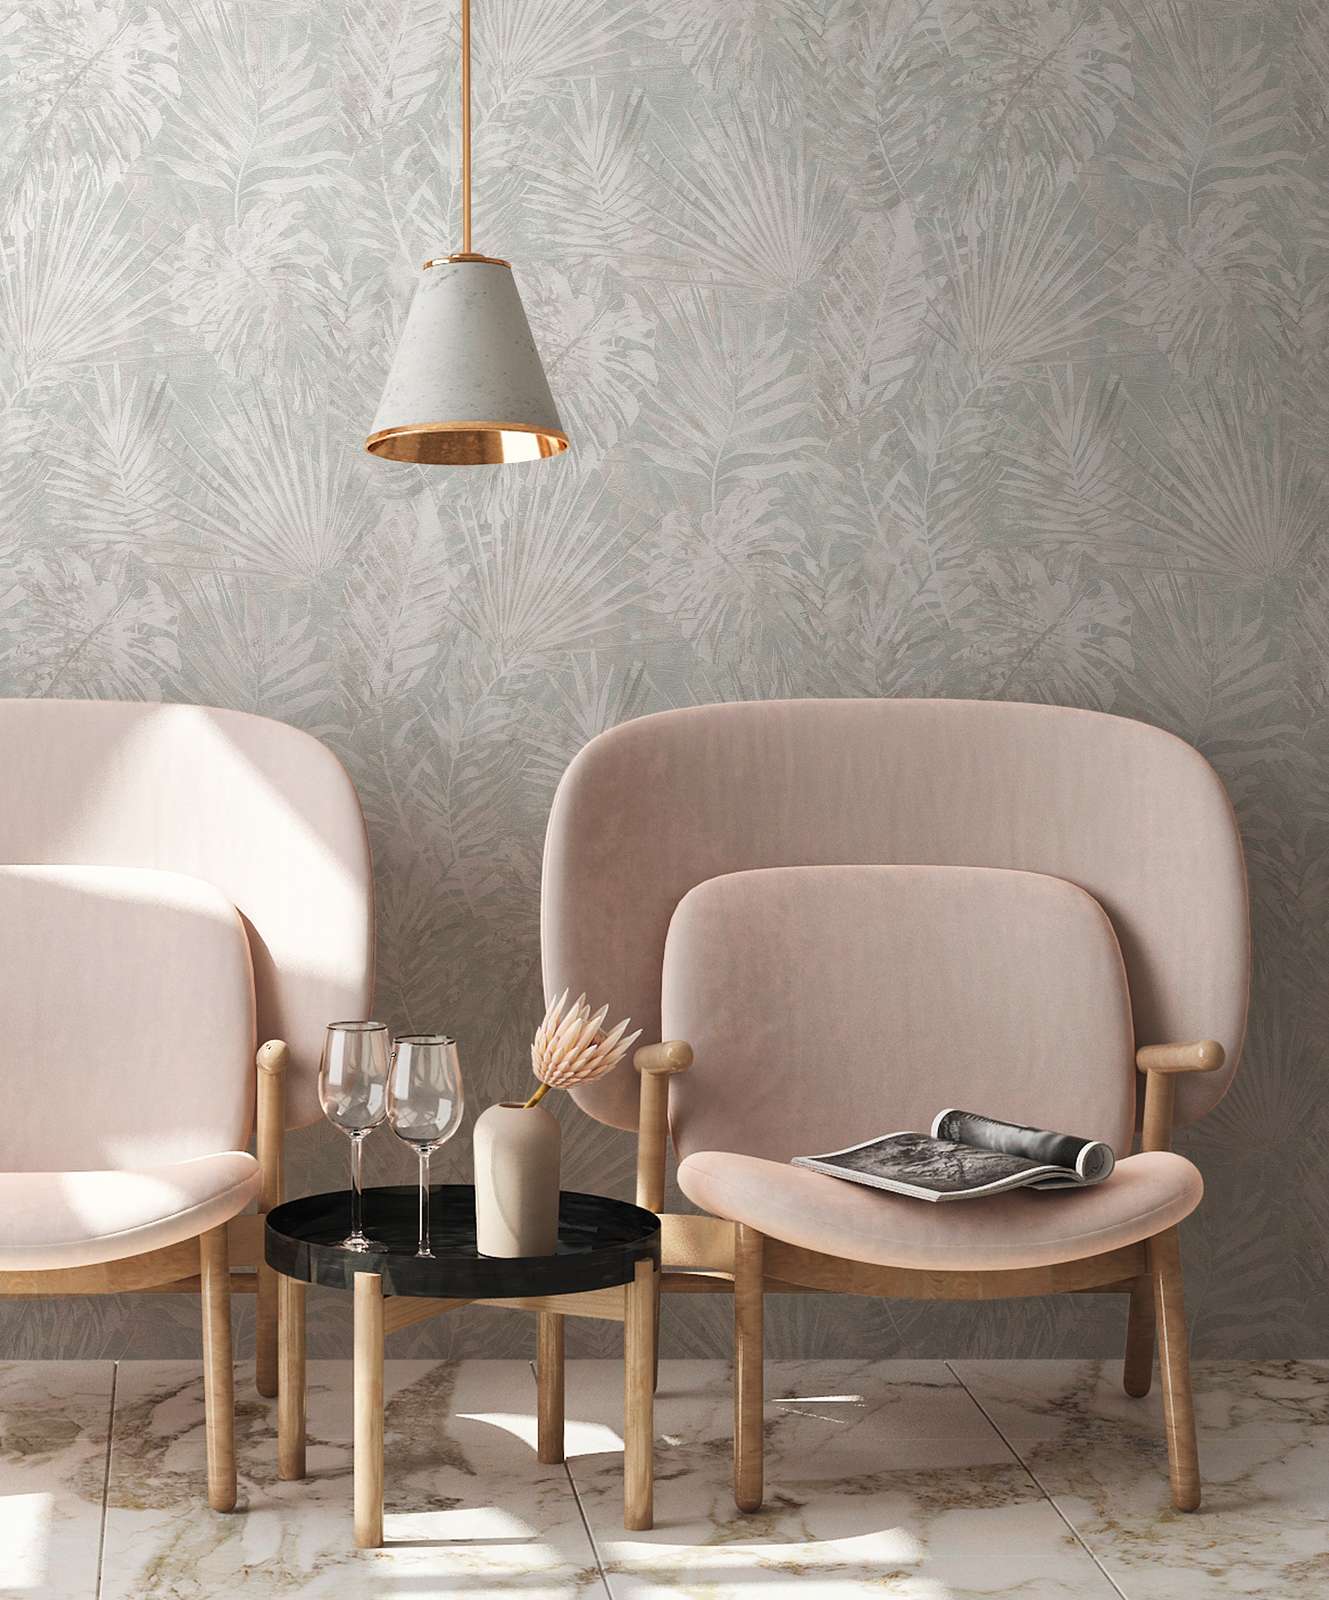             Non-woven wallpaper with leaf motif PVC-free - grey, beige, white
        